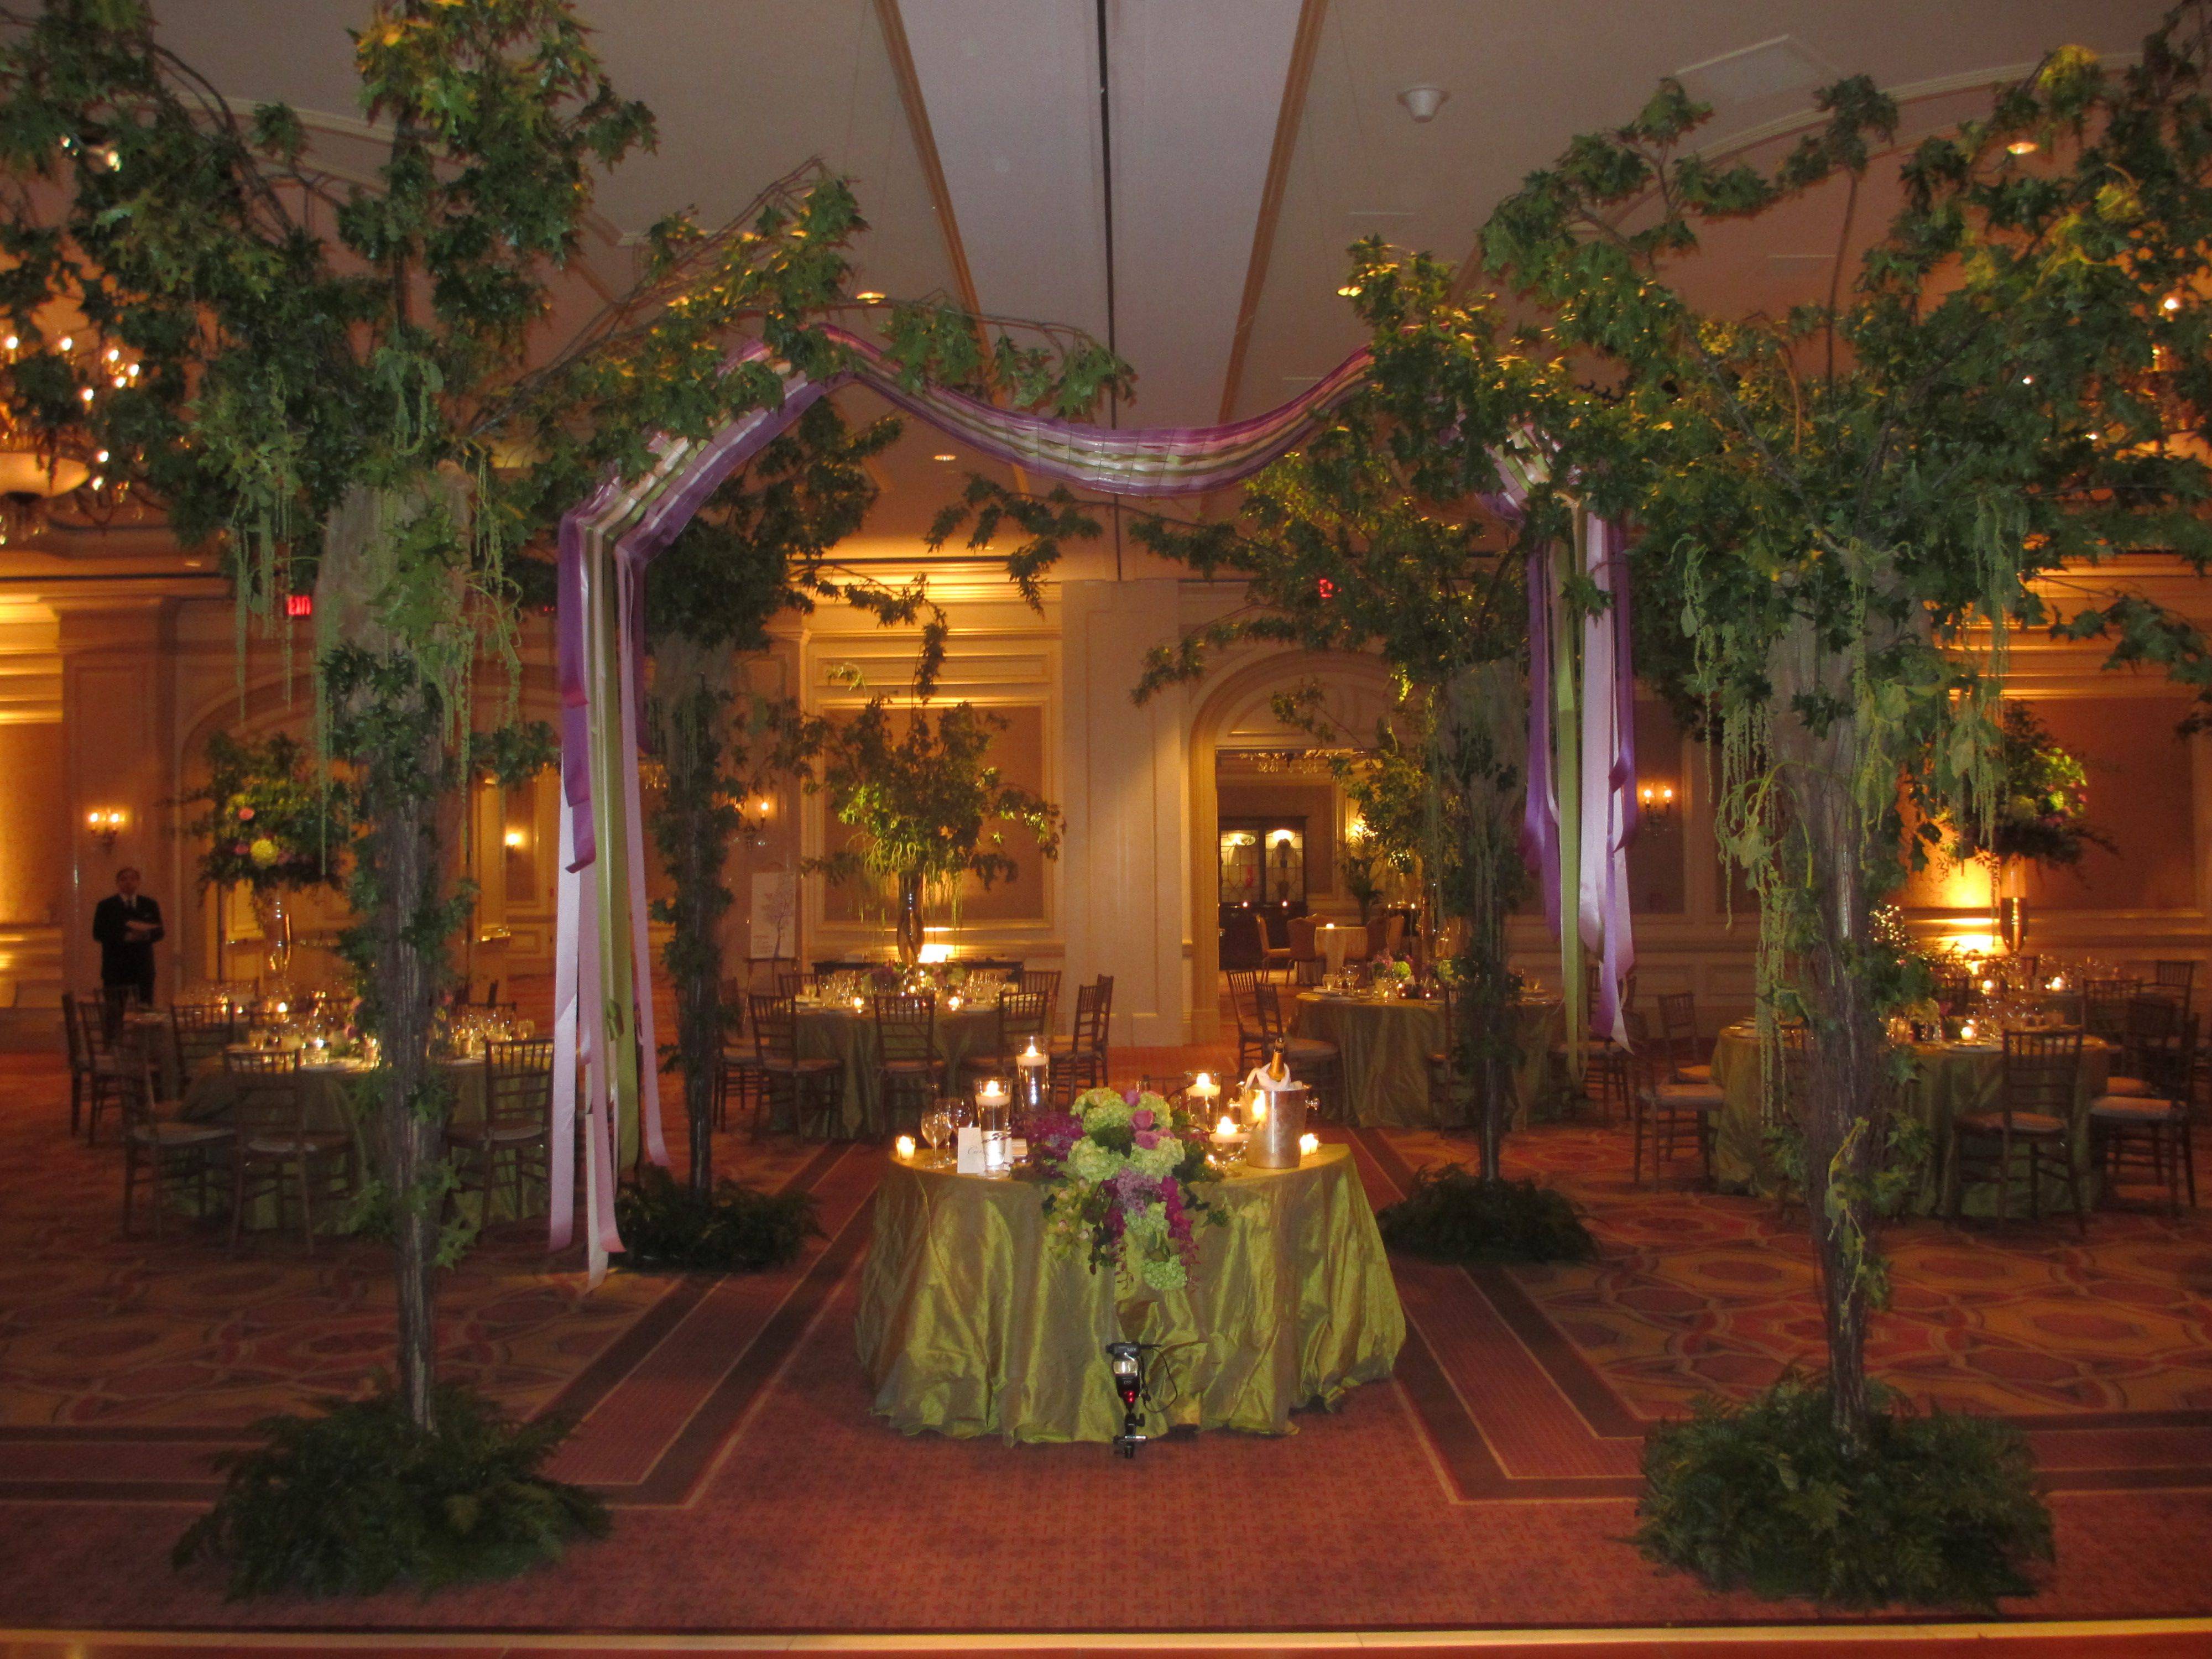 An Enchanted Garden Ceremony Fairytale Wedding Reception